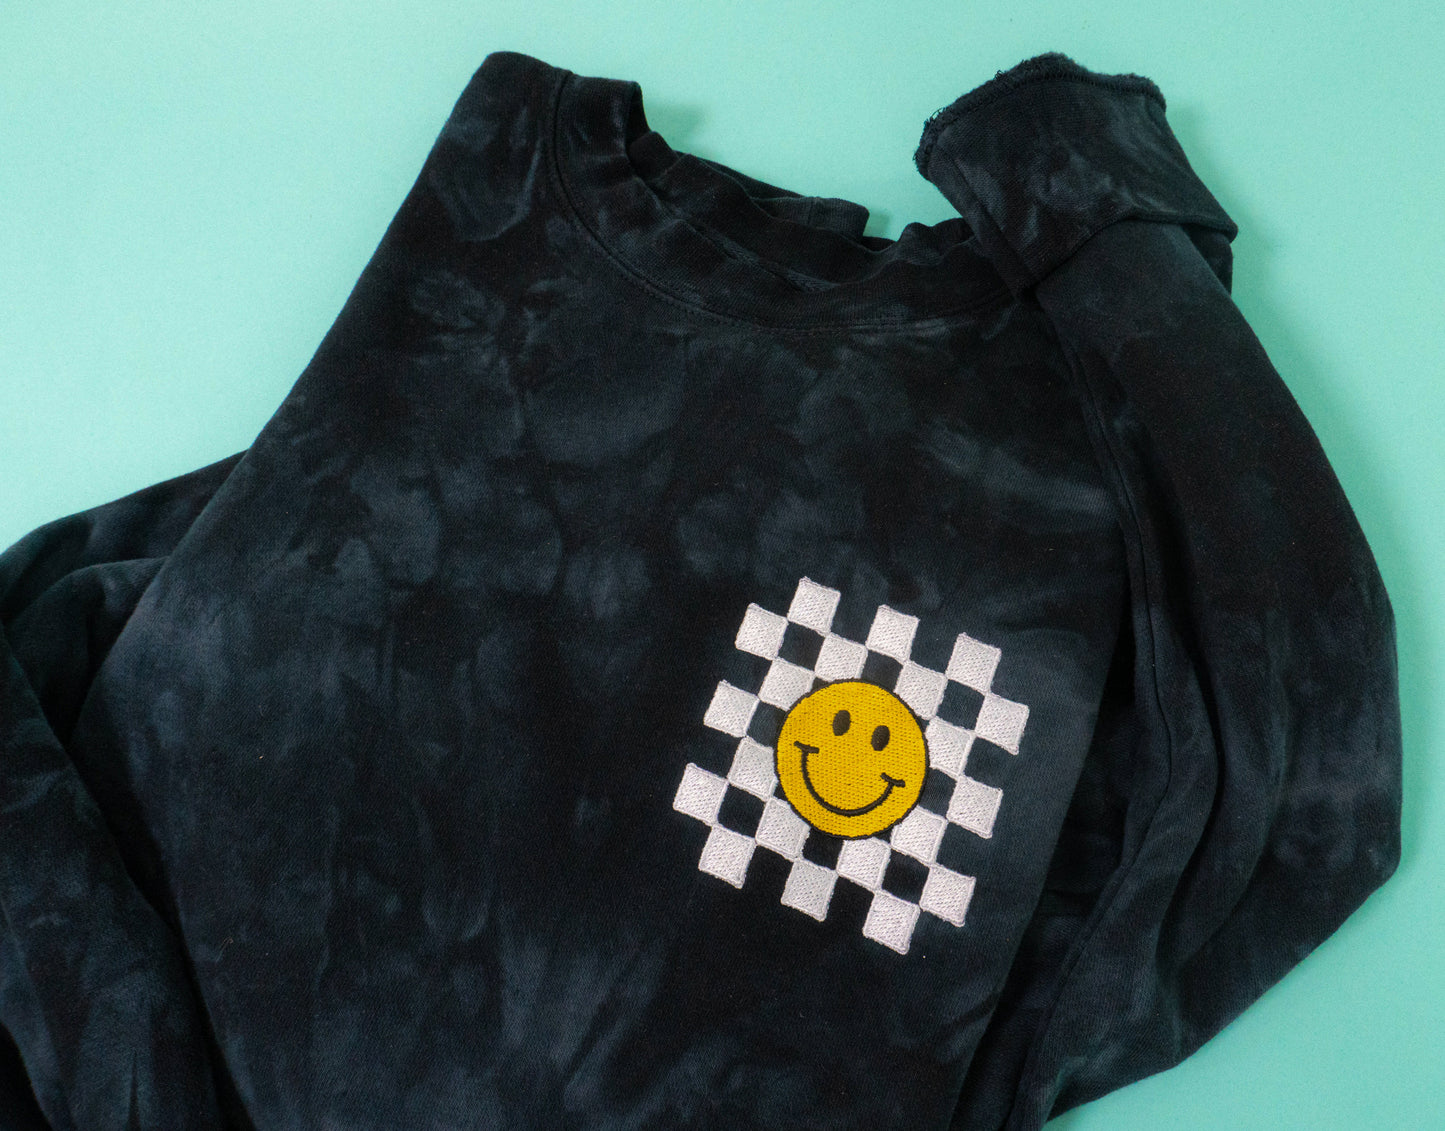 Old School Checkered Smiley - Embroidered Sweatshirt (Black Tie Dye)